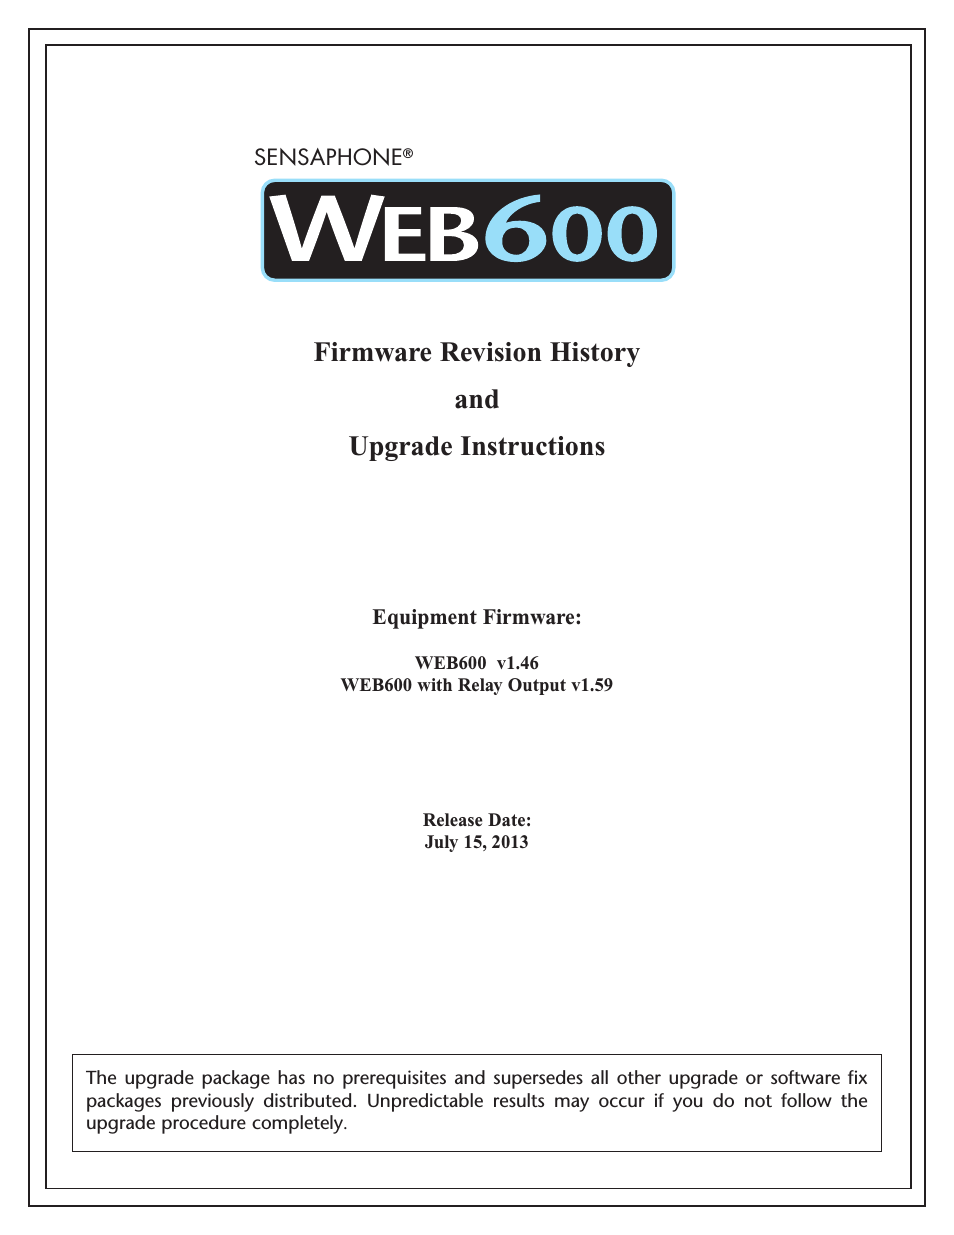 WEB600 Upgrade instructions